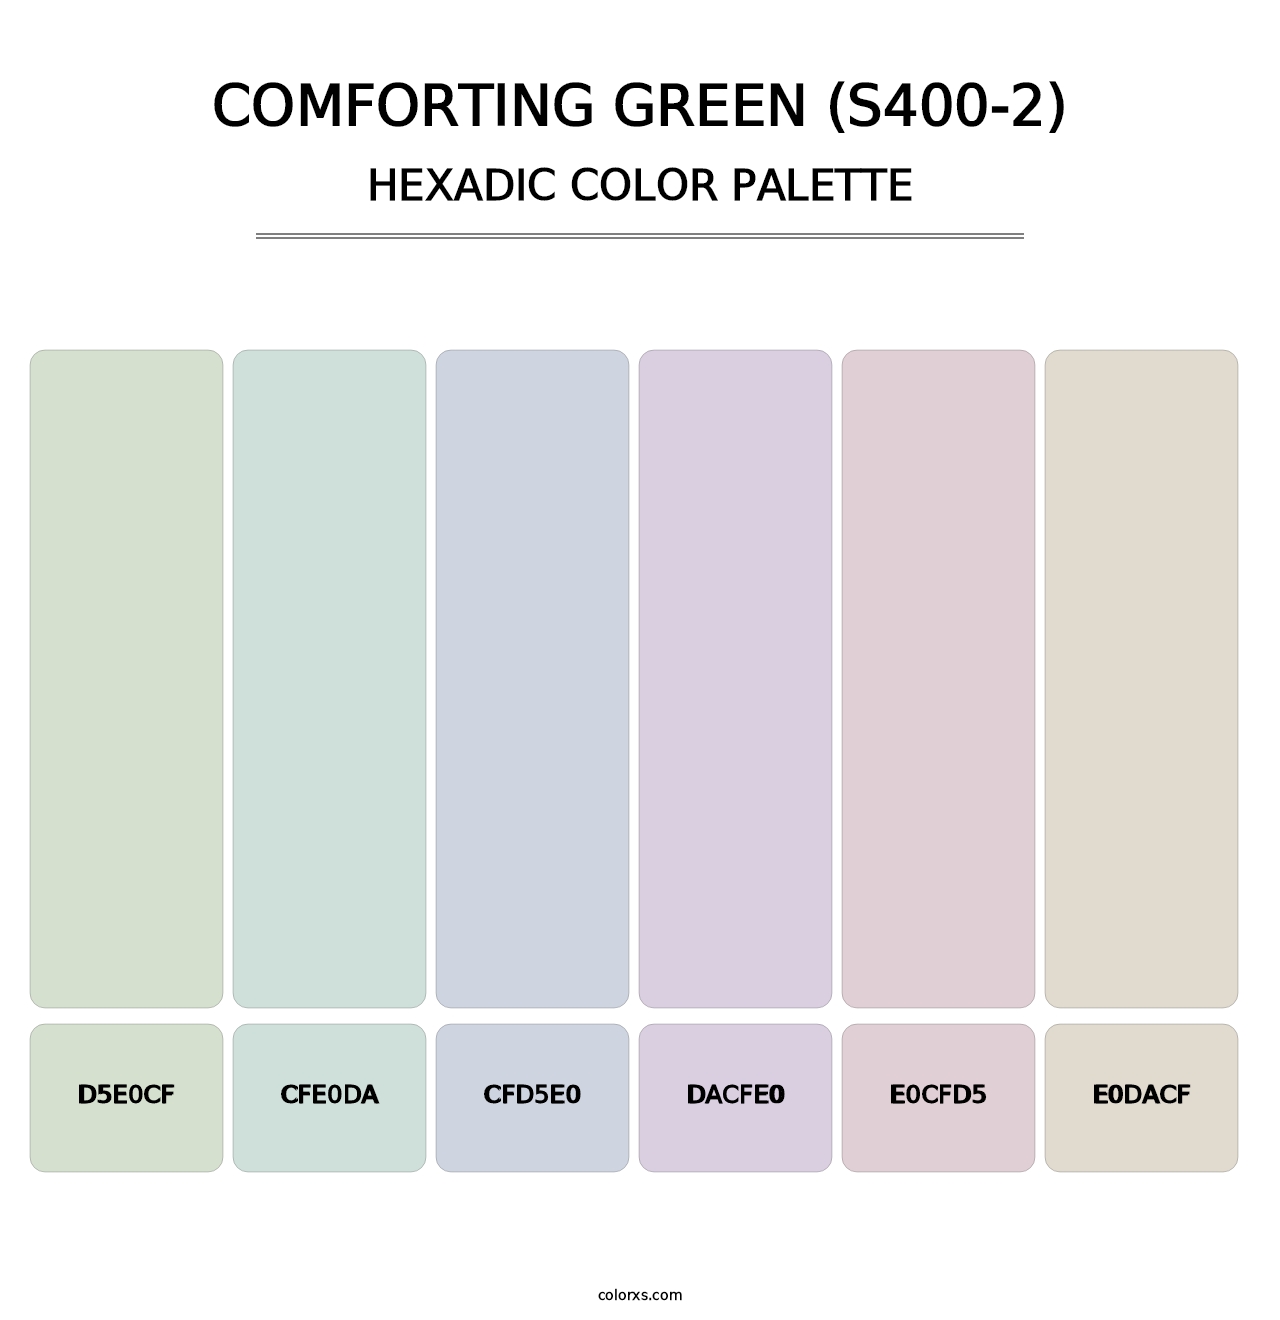 Comforting Green (S400-2) - Hexadic Color Palette